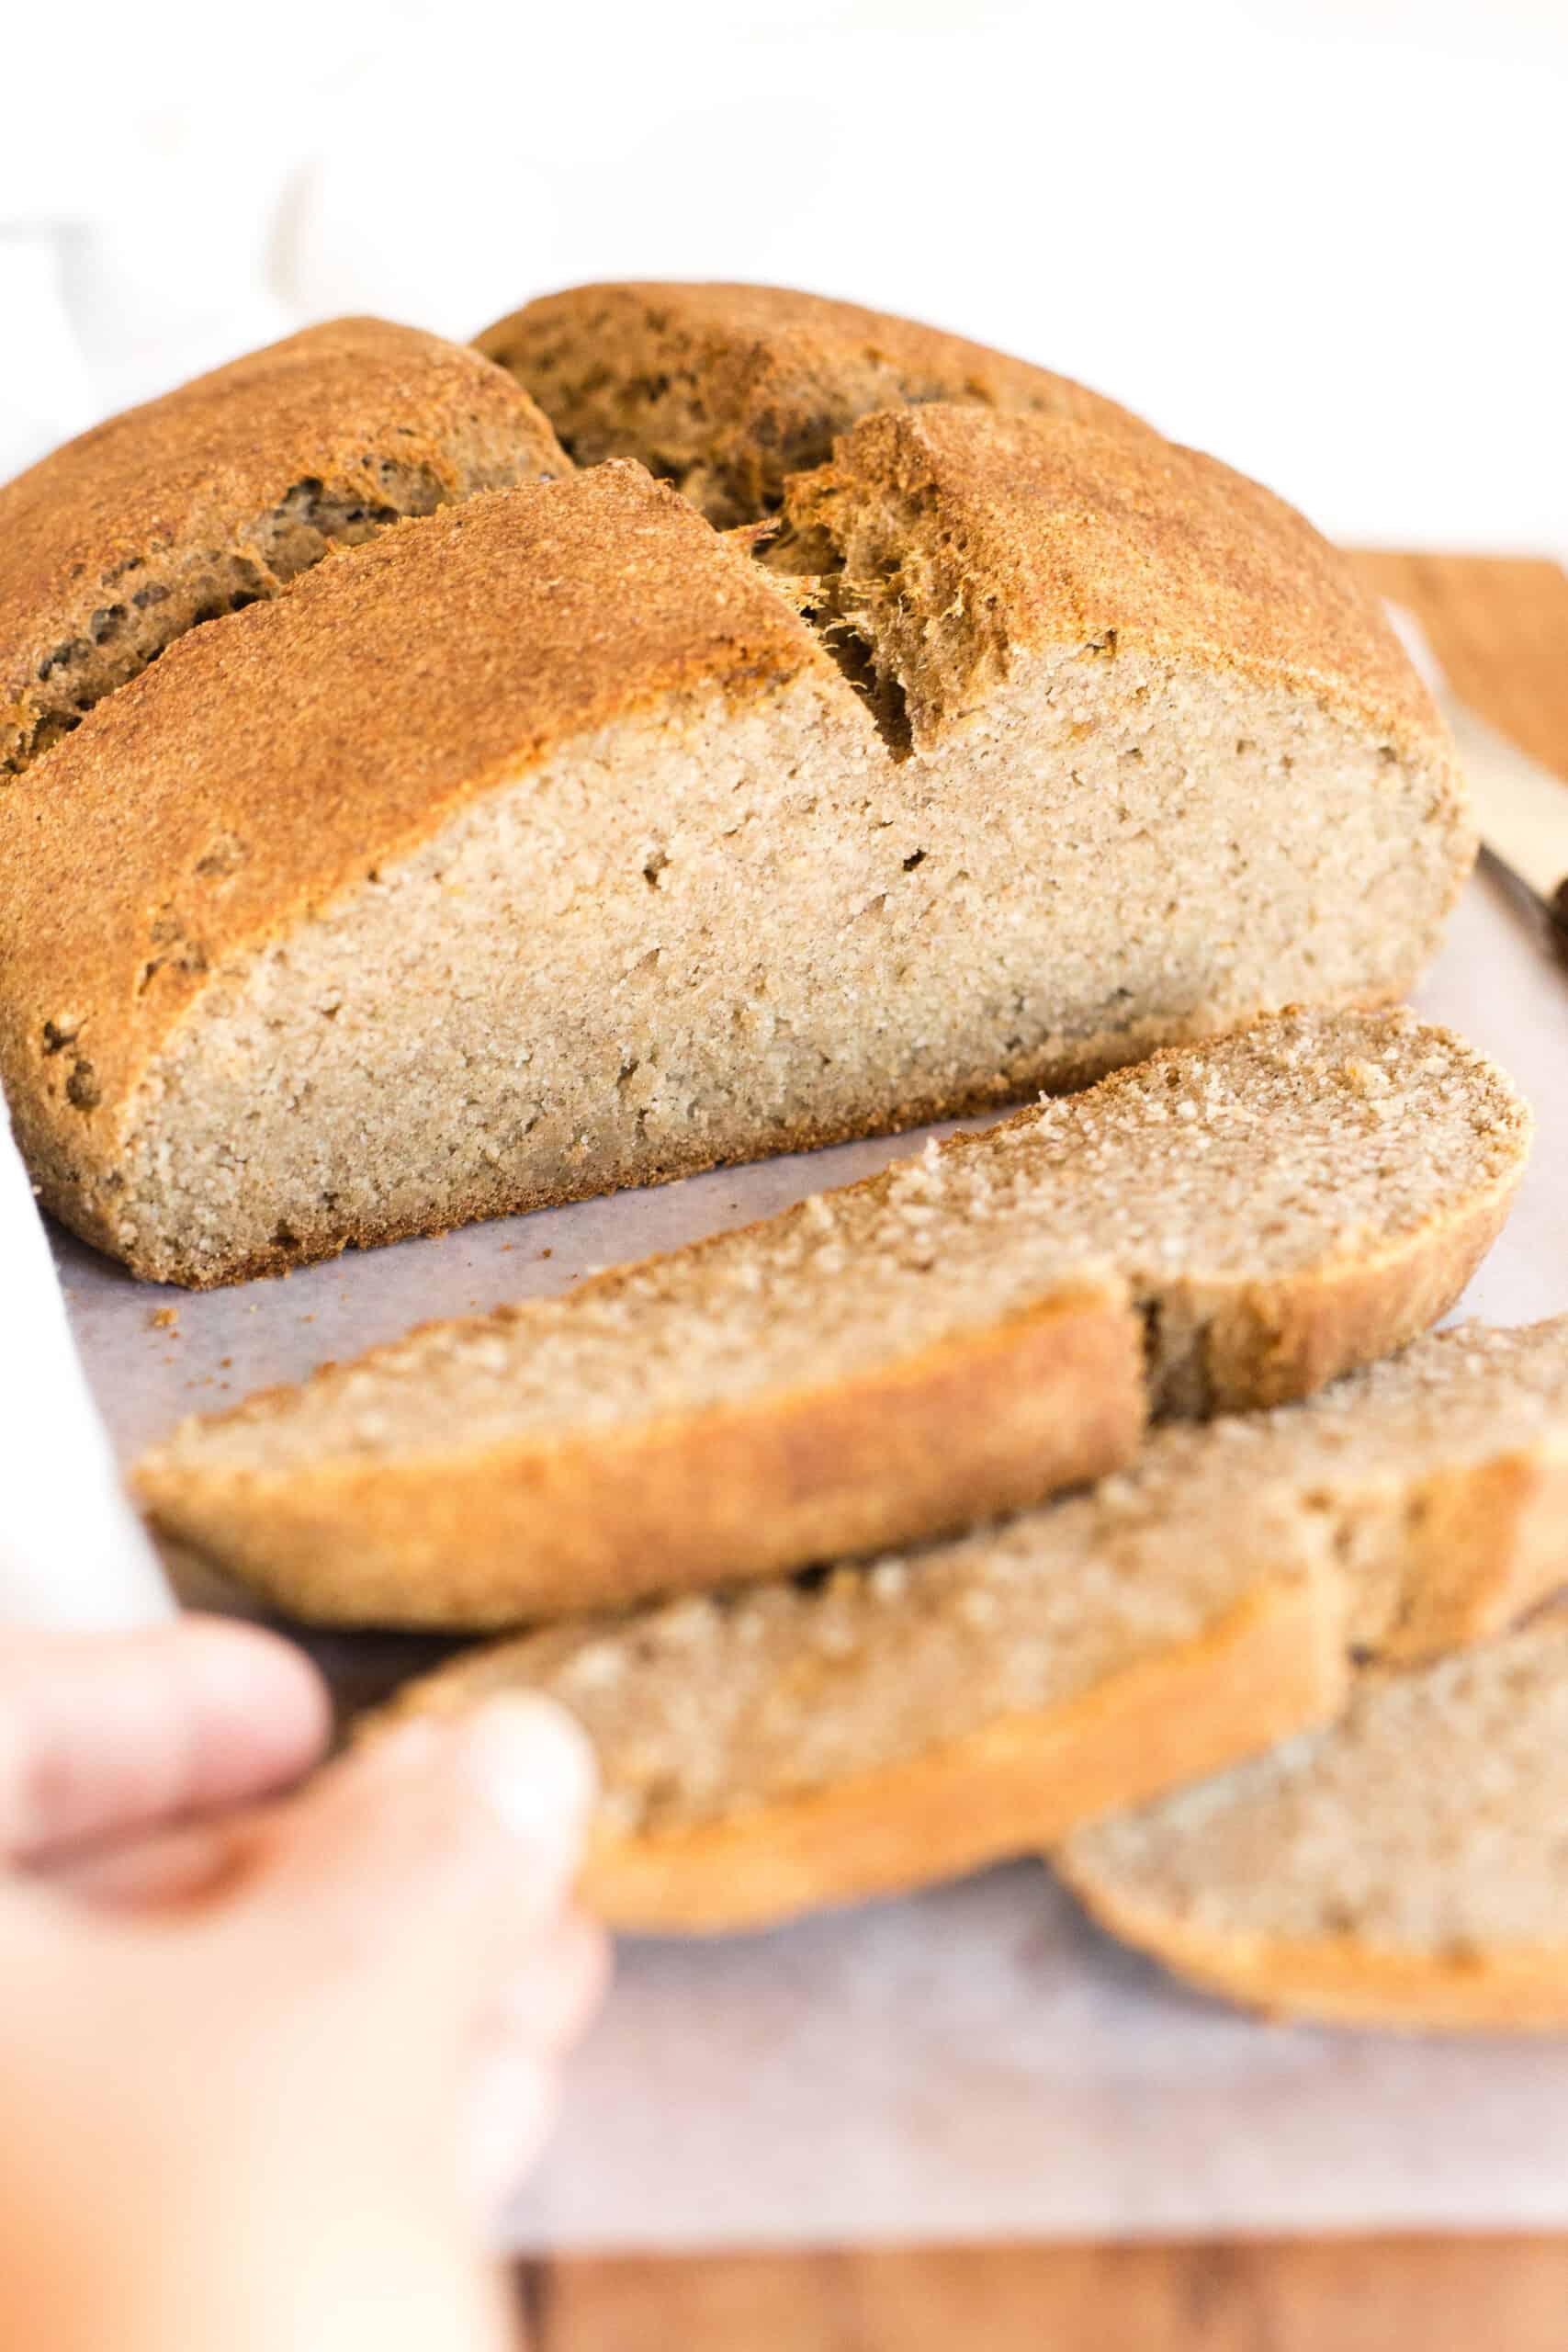 Sliced loaf of Irish brown bread.